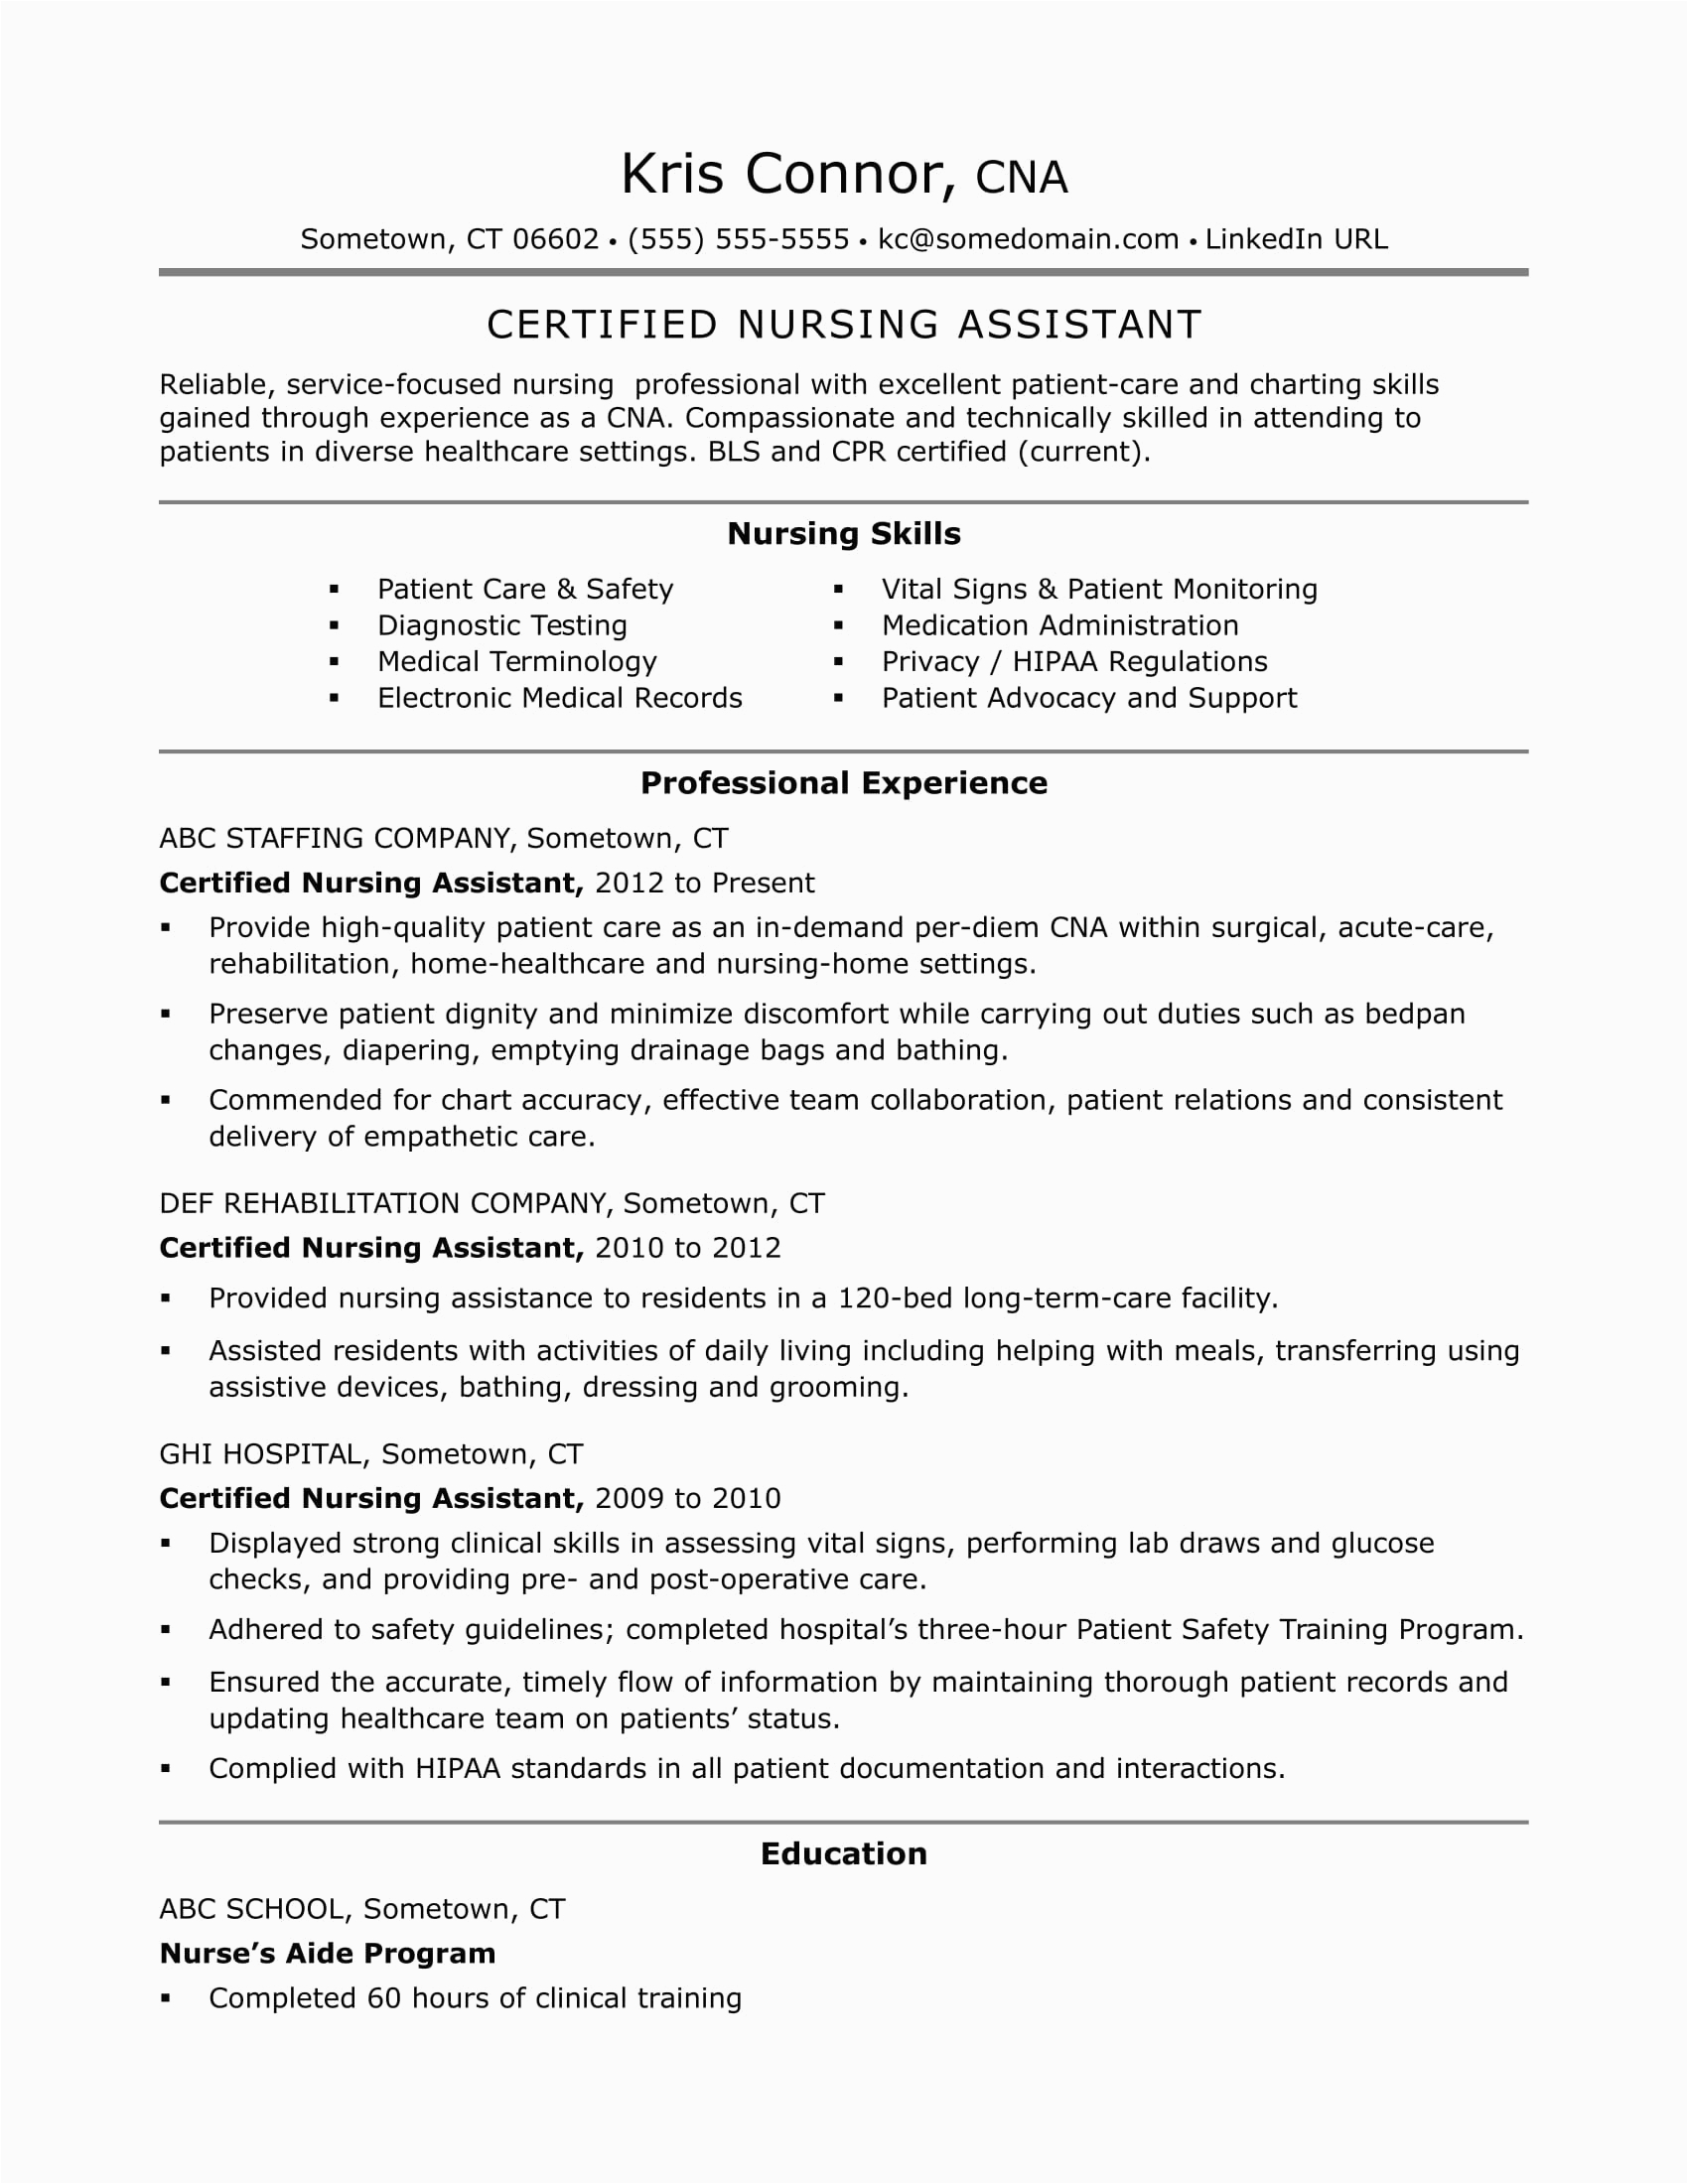 New Certified Nursing assistant Resume Samples Cna Resume Examples Skills for Cnas